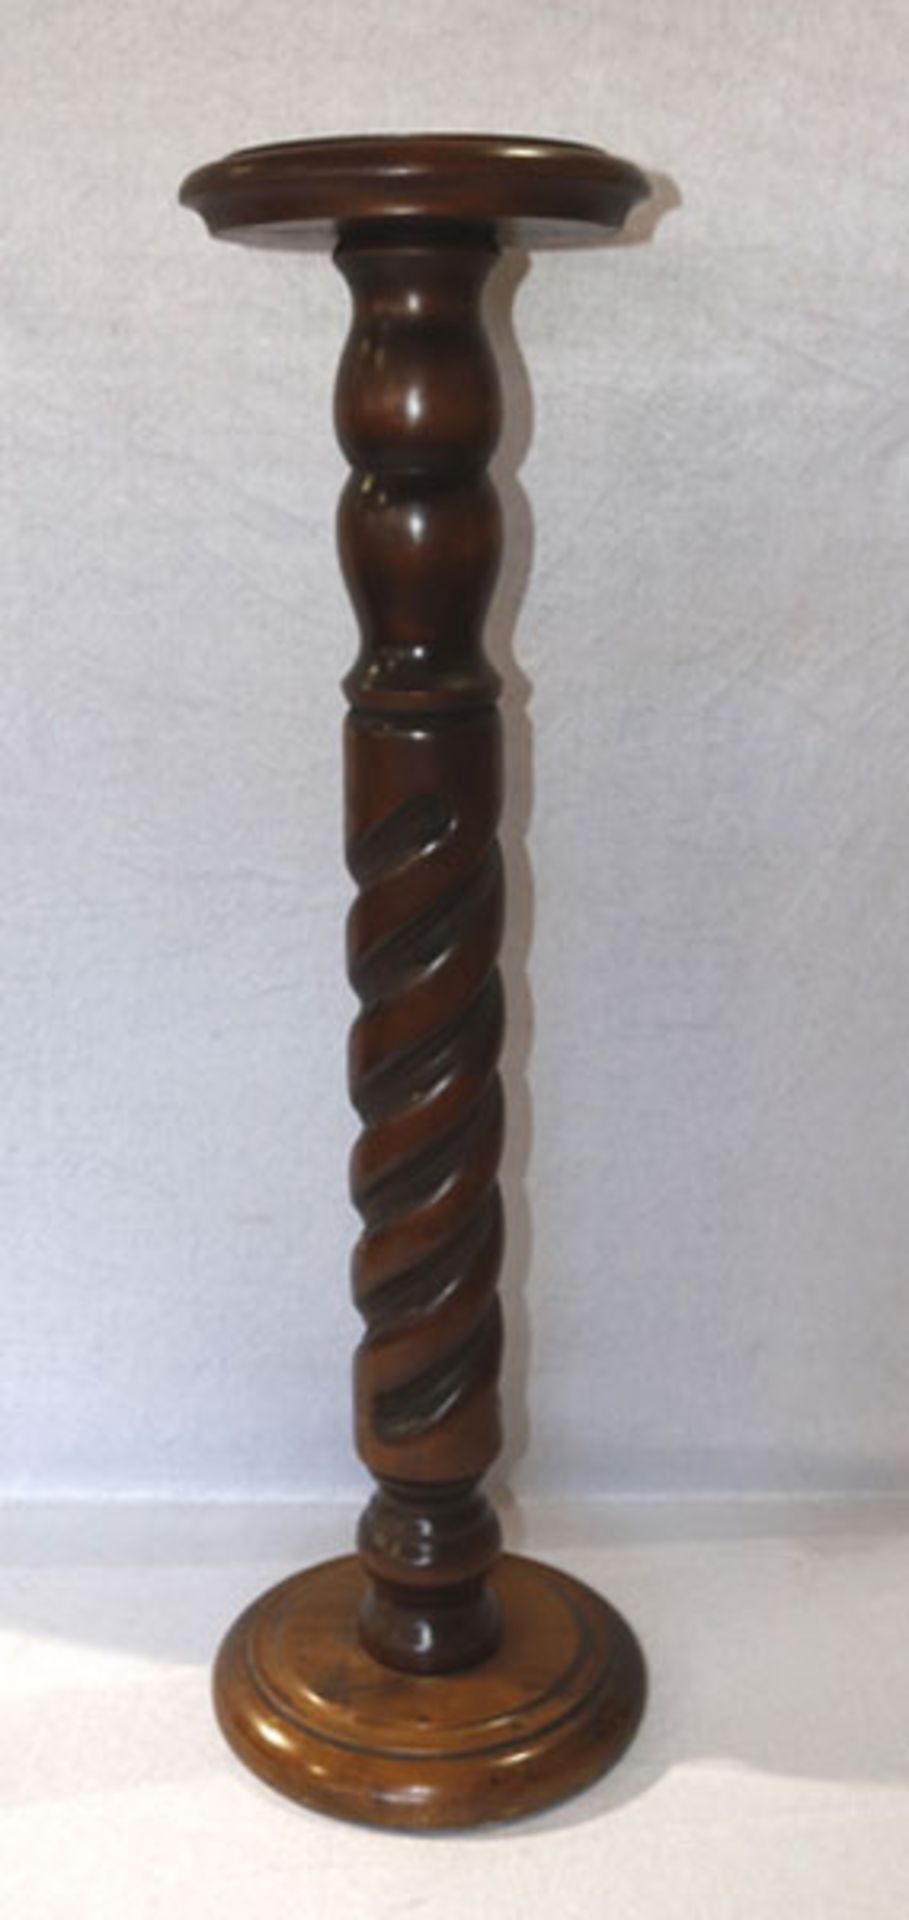 Holz Blumensäule, gedrechselt, H 84 cm, D 22 cm, Gebrauchsspuren